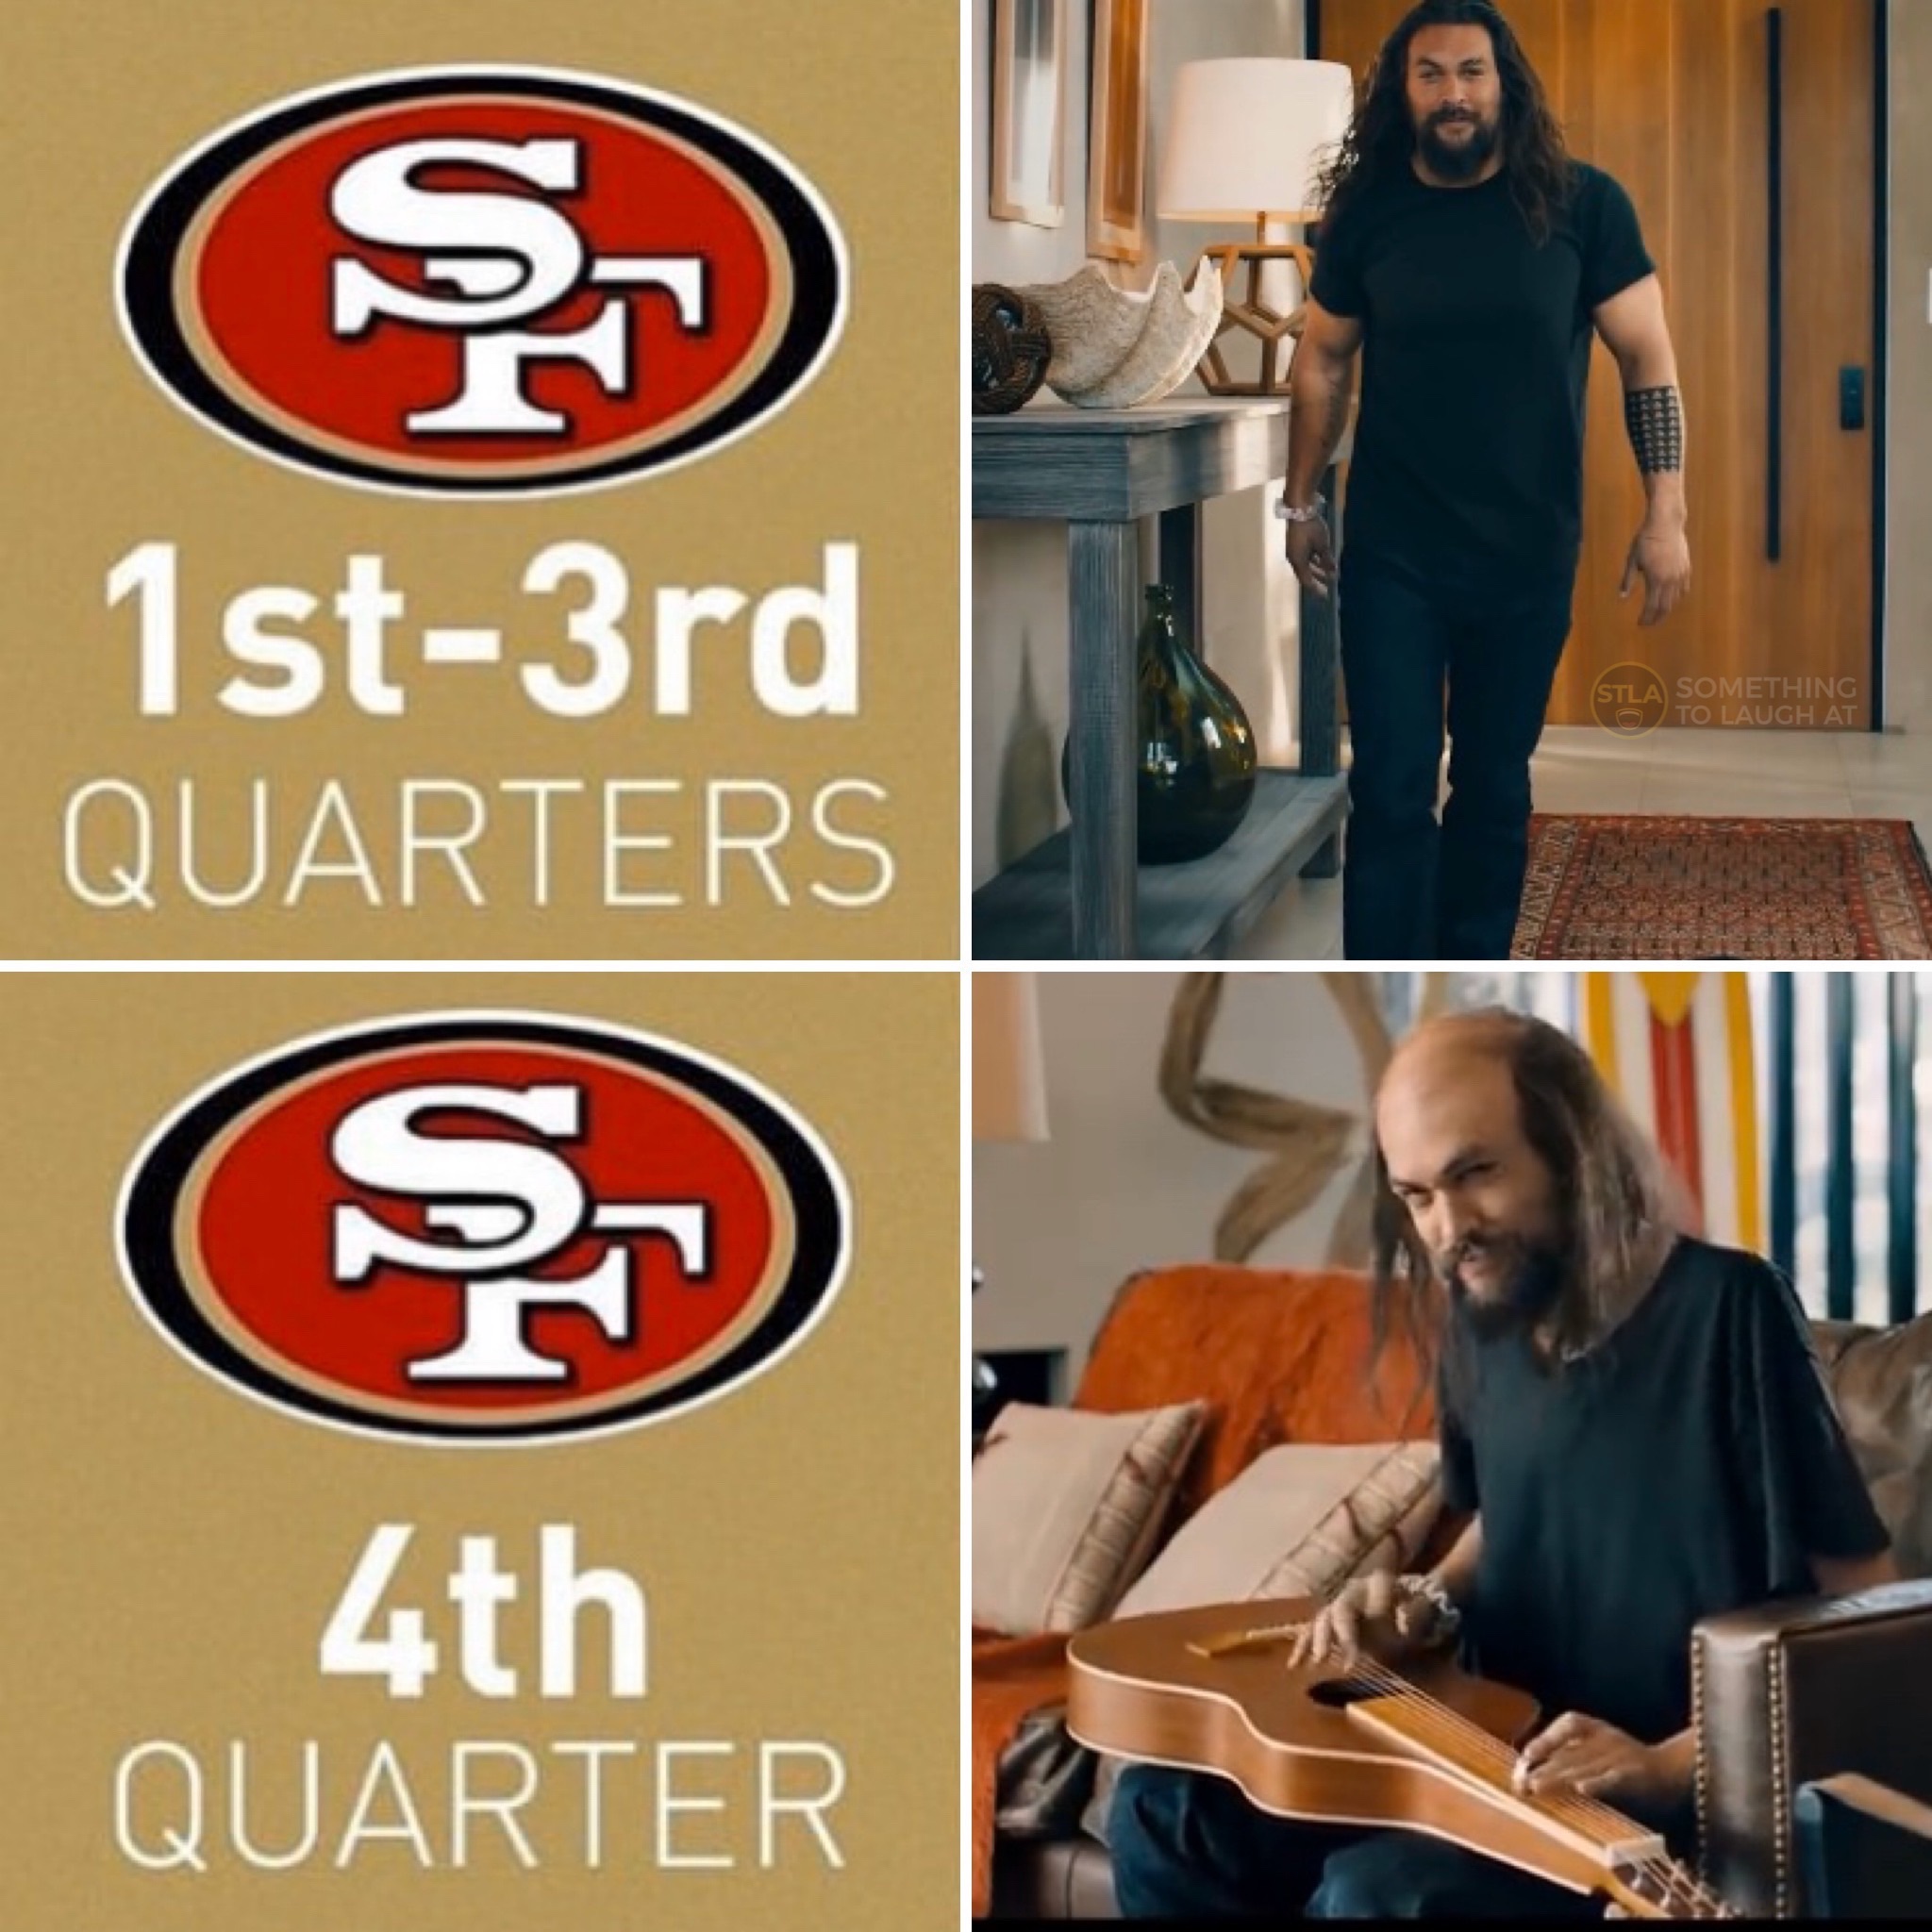 49ers 1st-3rd quarter vs 4th quarter meme